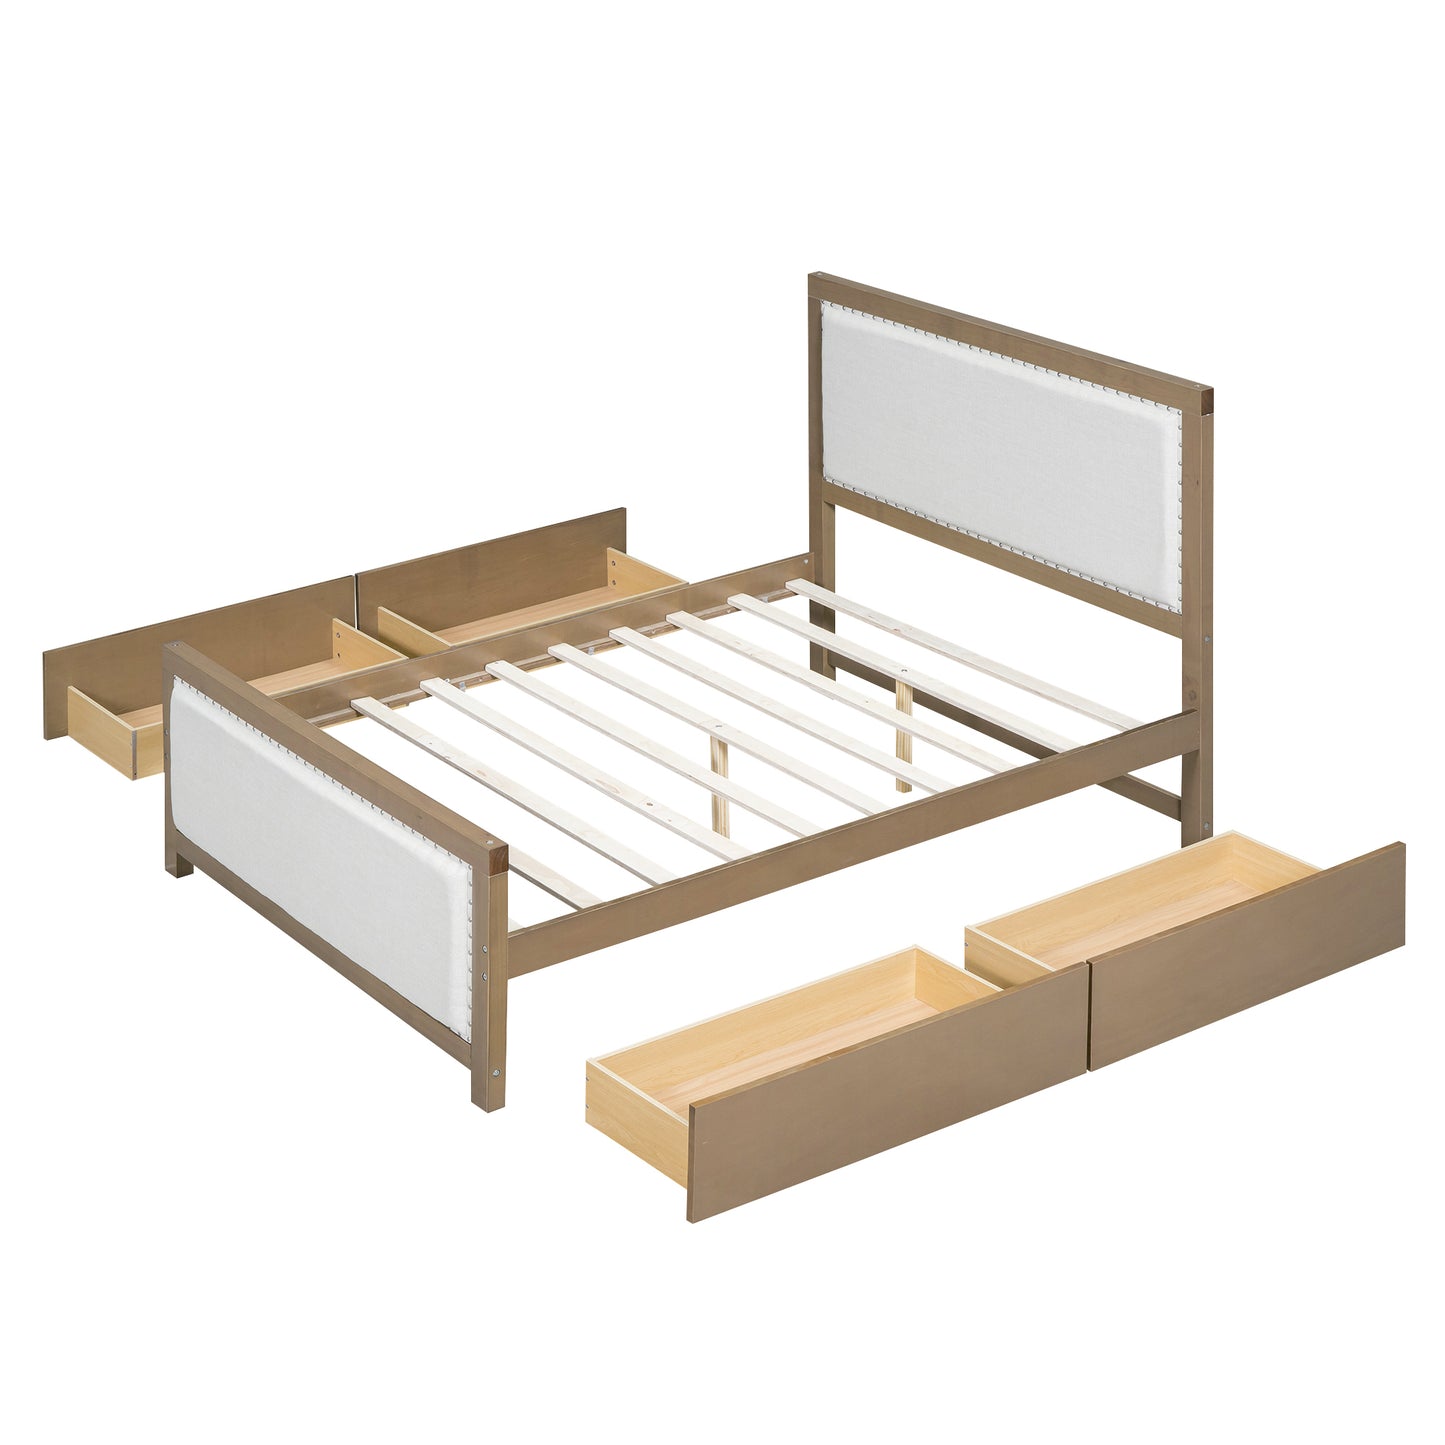 Emmett Full Bed (natural wood)